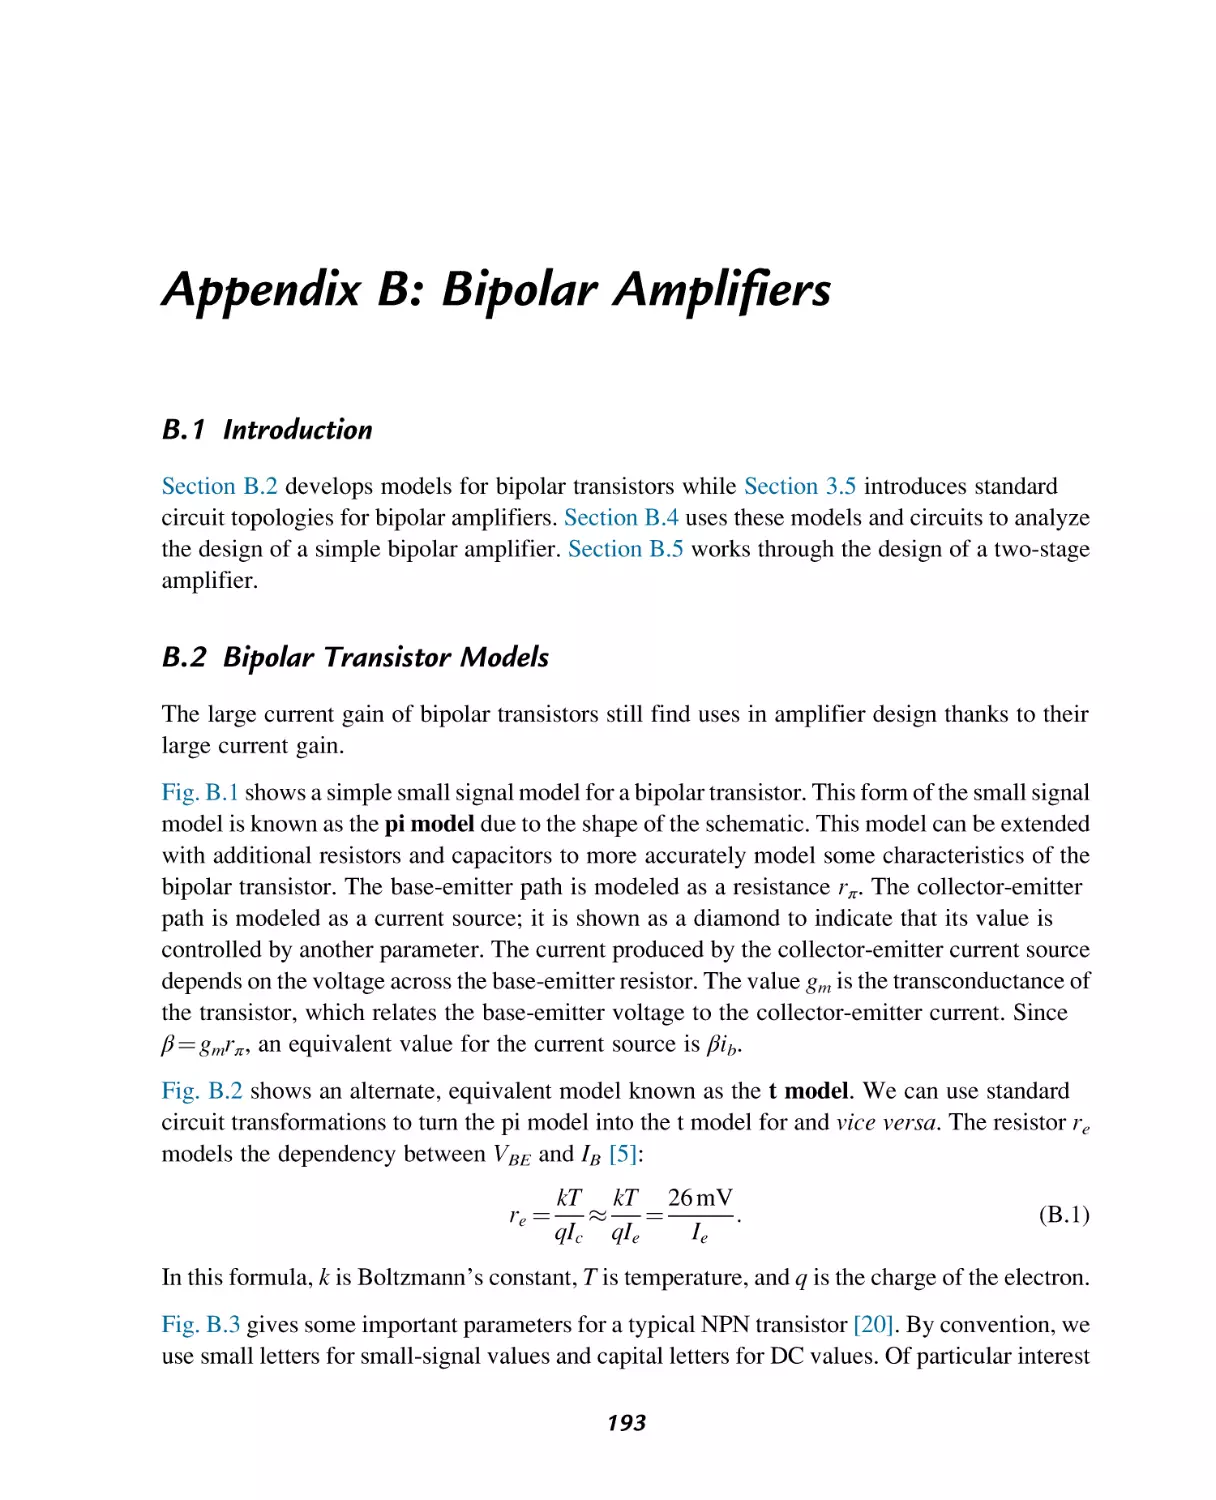 Appendix B
Introduction
Bipolar Transistor Models